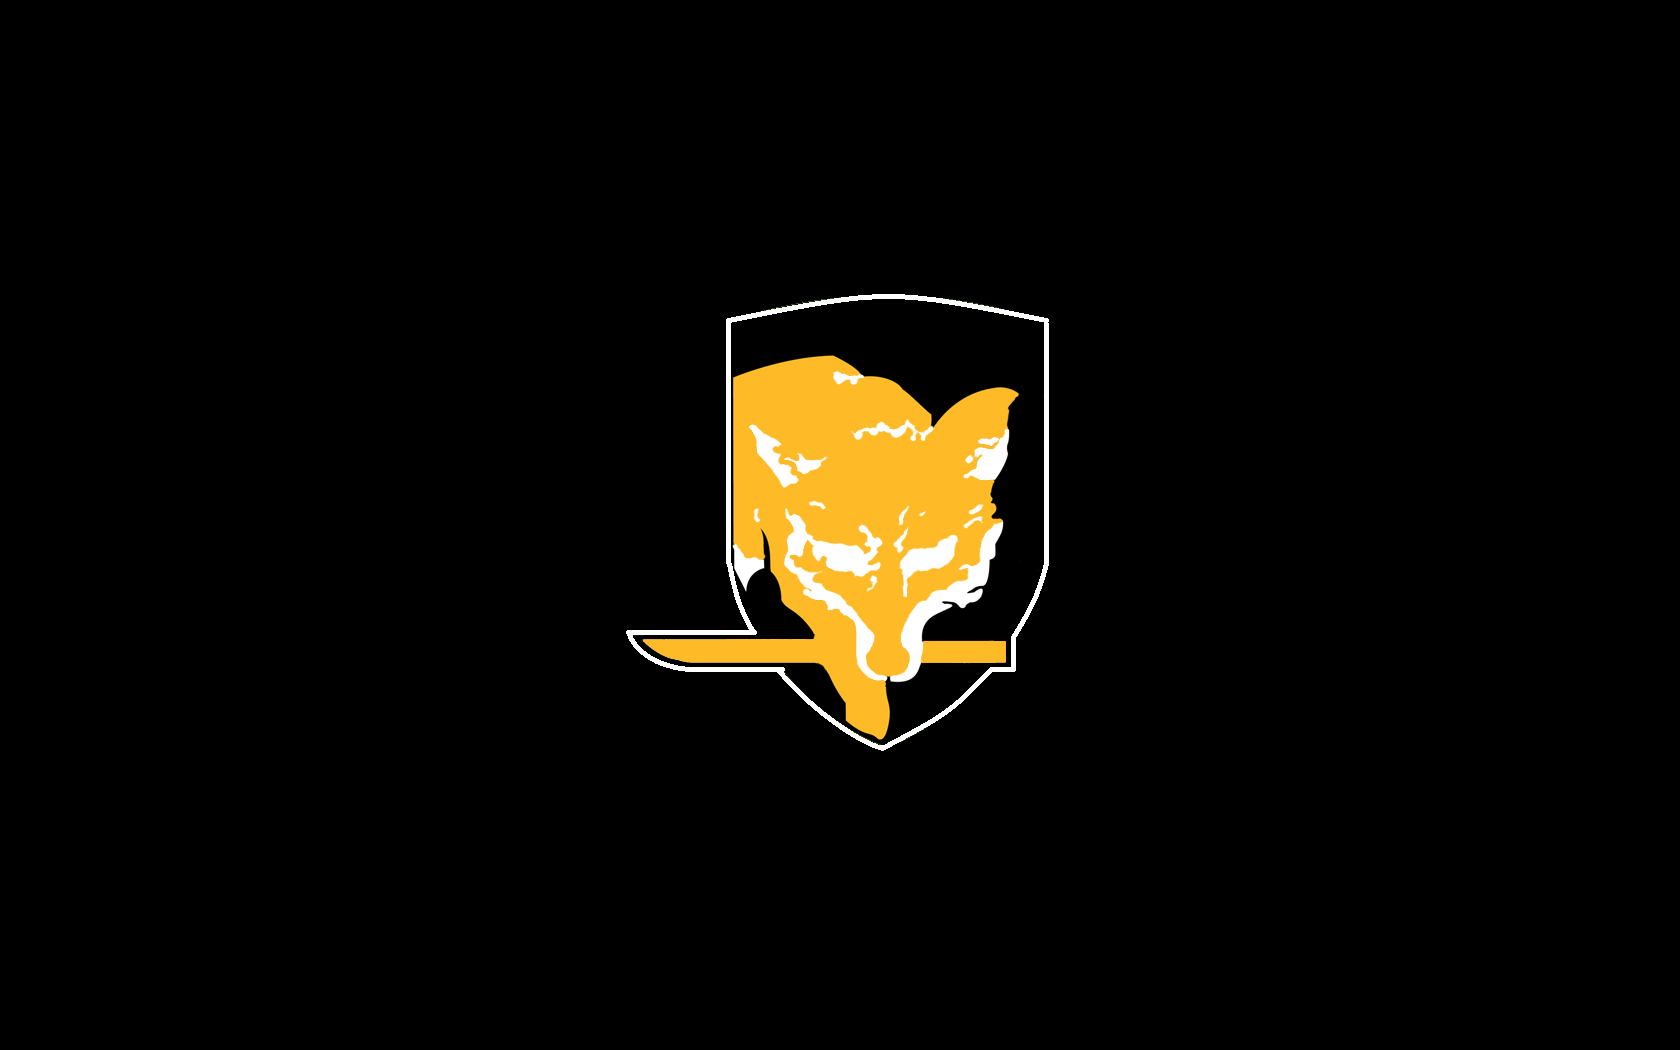 foxhound logo png